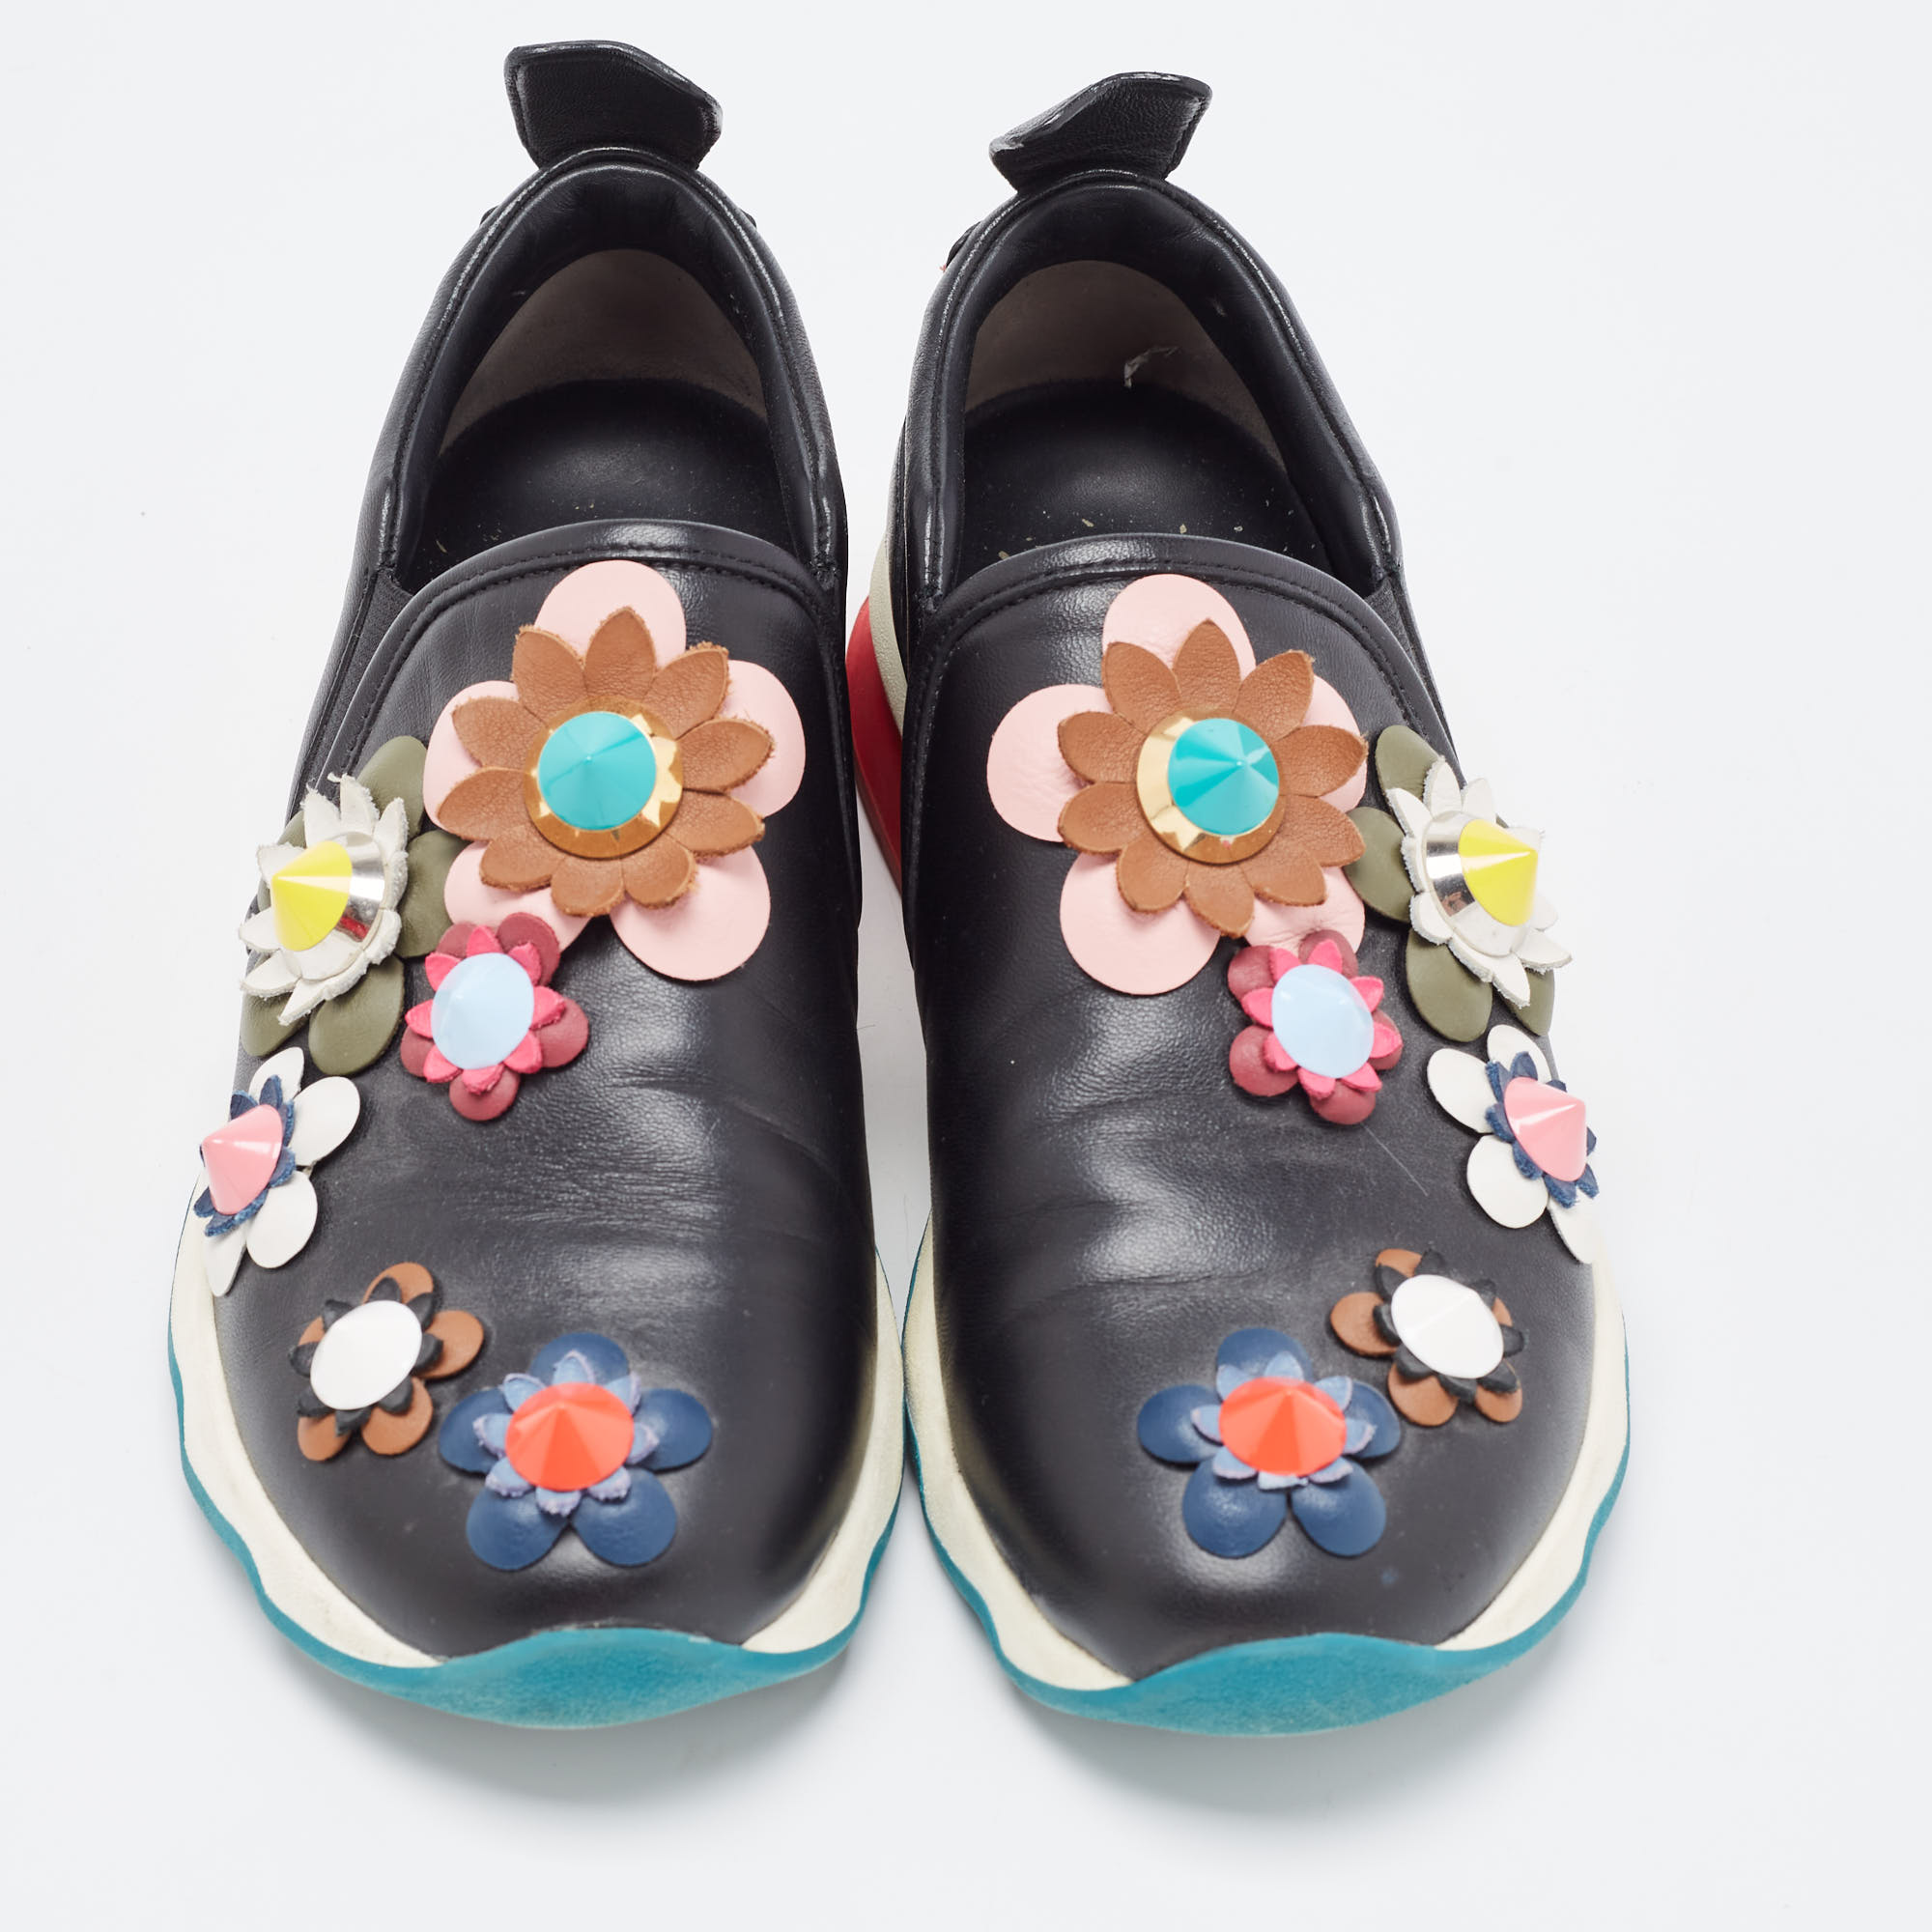 Fendi Black Leather Flowerland Embellished Slip On Sneakers Size 35